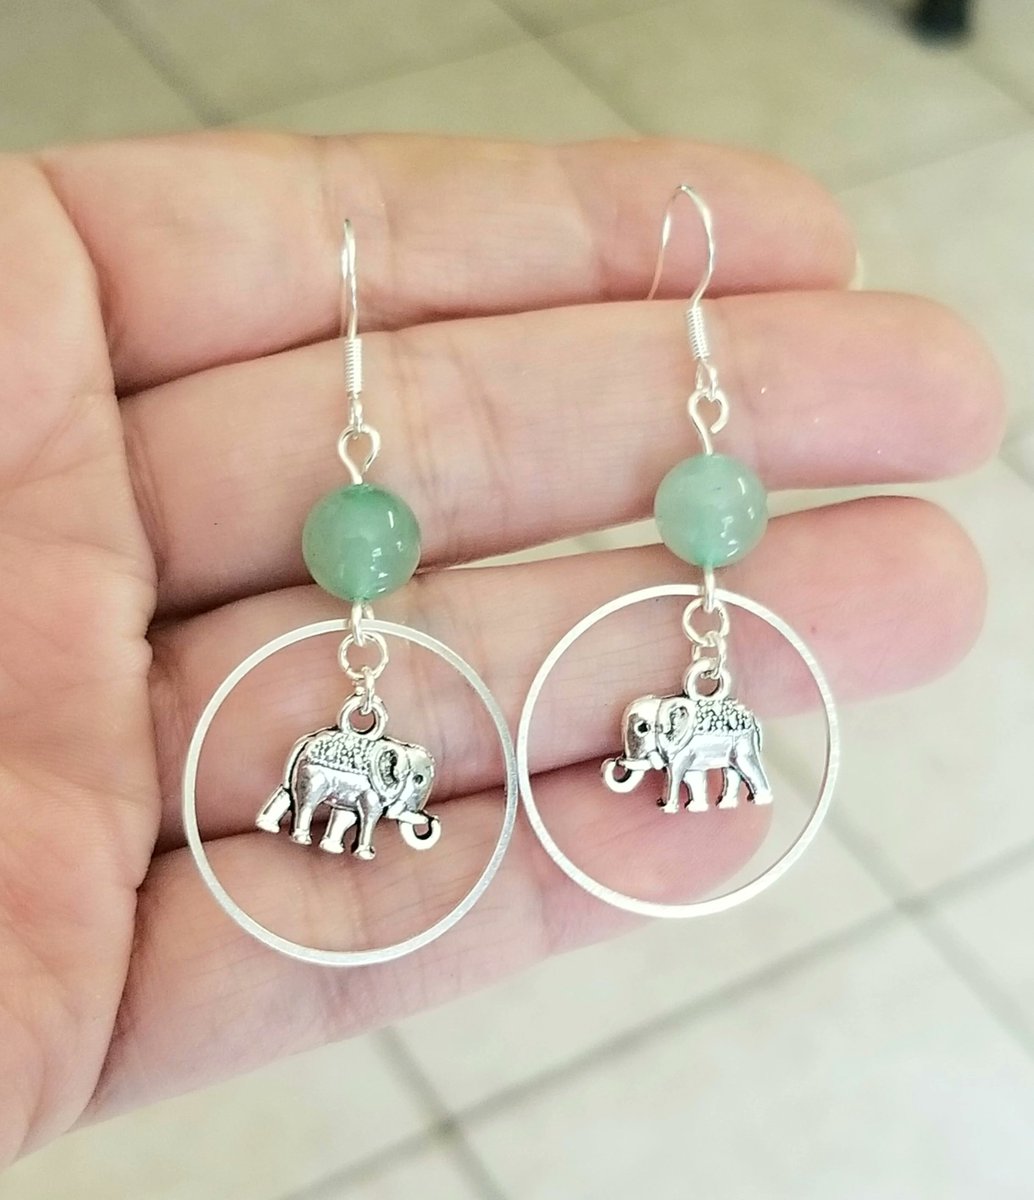 Silver Elephant Hoop Earrings, #Aventurine #aventurinejewelry #aventurineearrings #elephant #elephants #elephantearrings #elephantjewelry #hoopearrings #earrings  #jewelry #handmadejewelry #giftsforher #mothersdaygifts #graduationgift

etsy.me/3QCP4IO via @Etsy